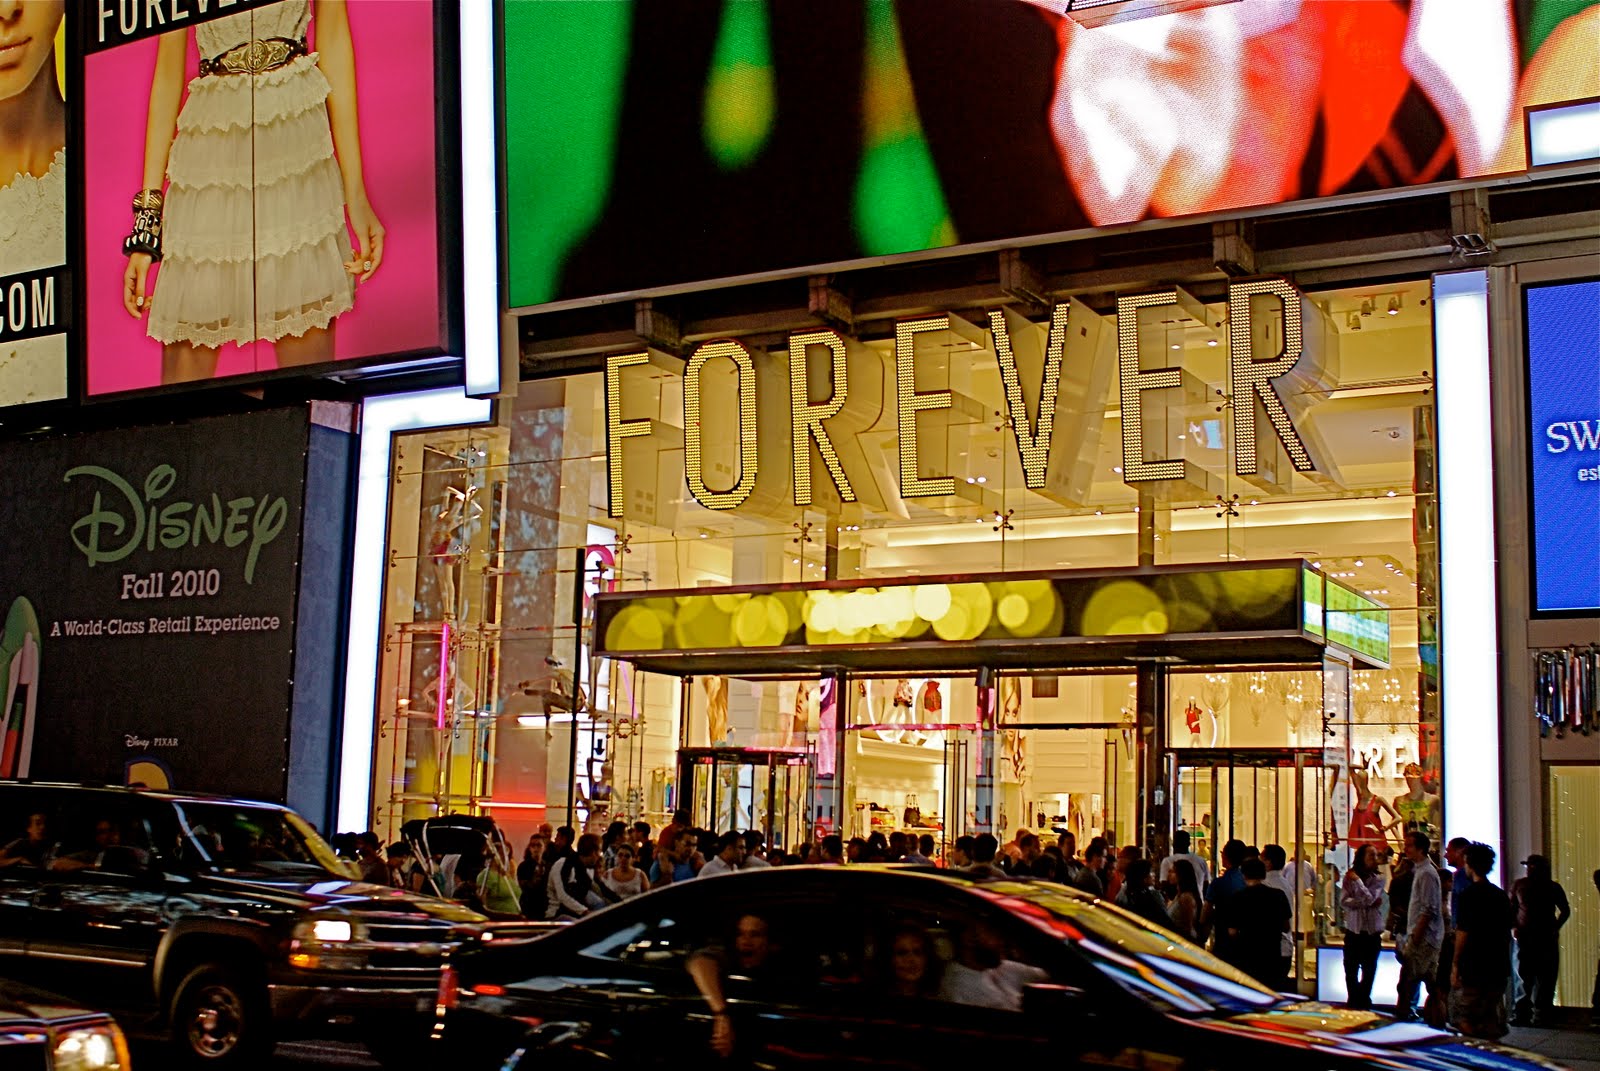 Forever 21 Times Square Digital Billboard on Vimeo